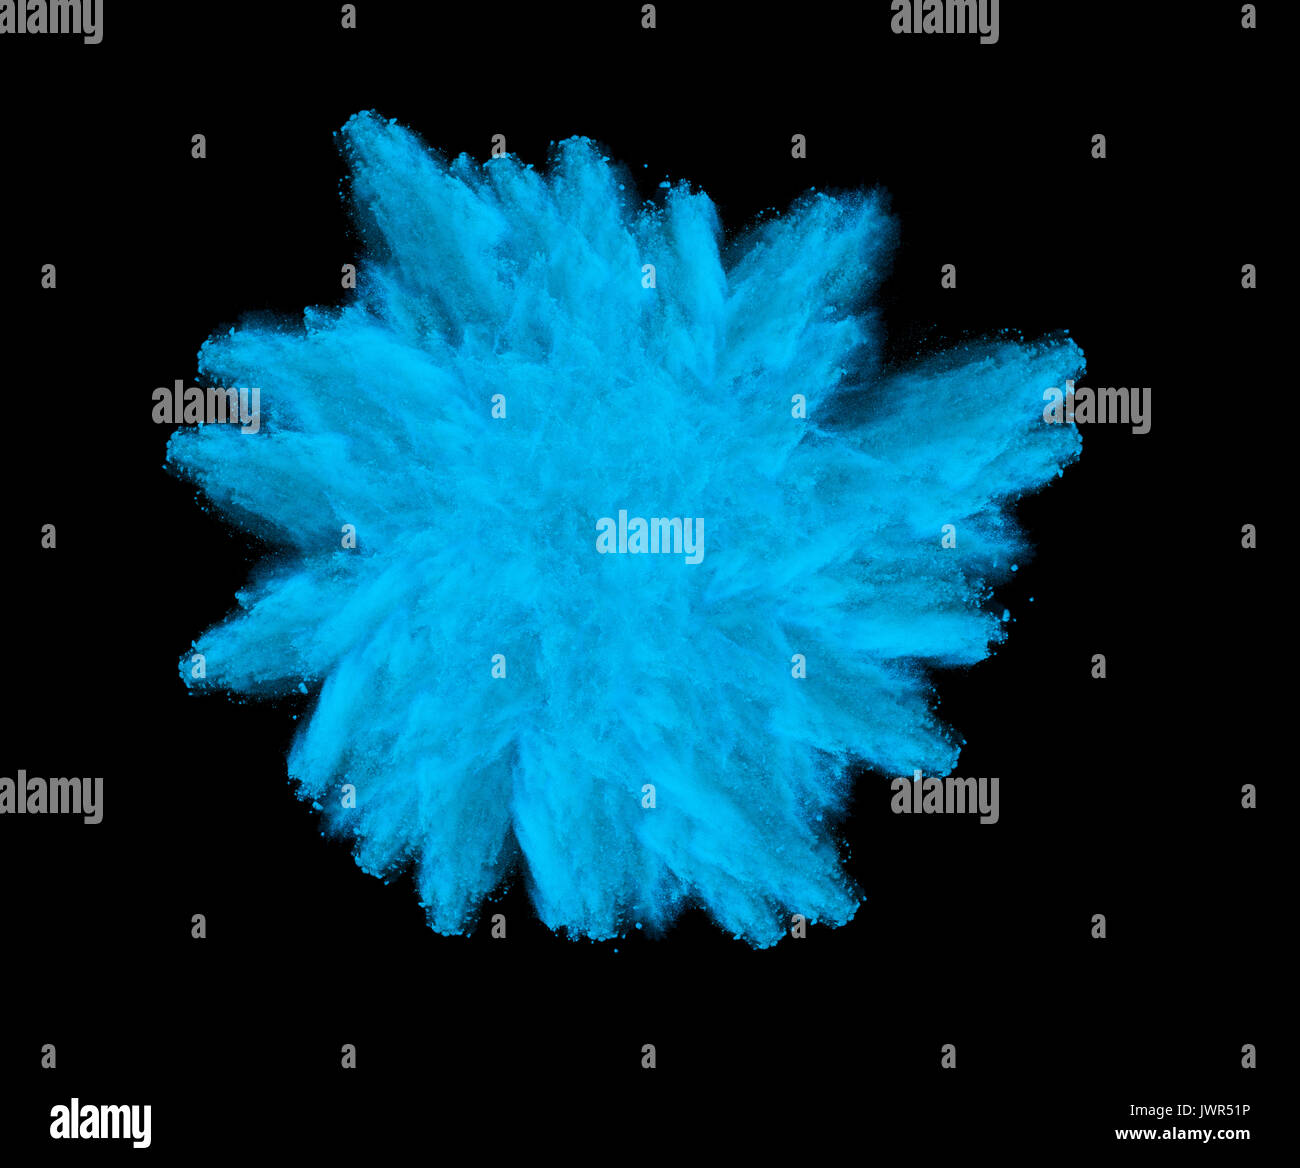 Freeze motion of blue dust explosion isolated on black background Stock Photo